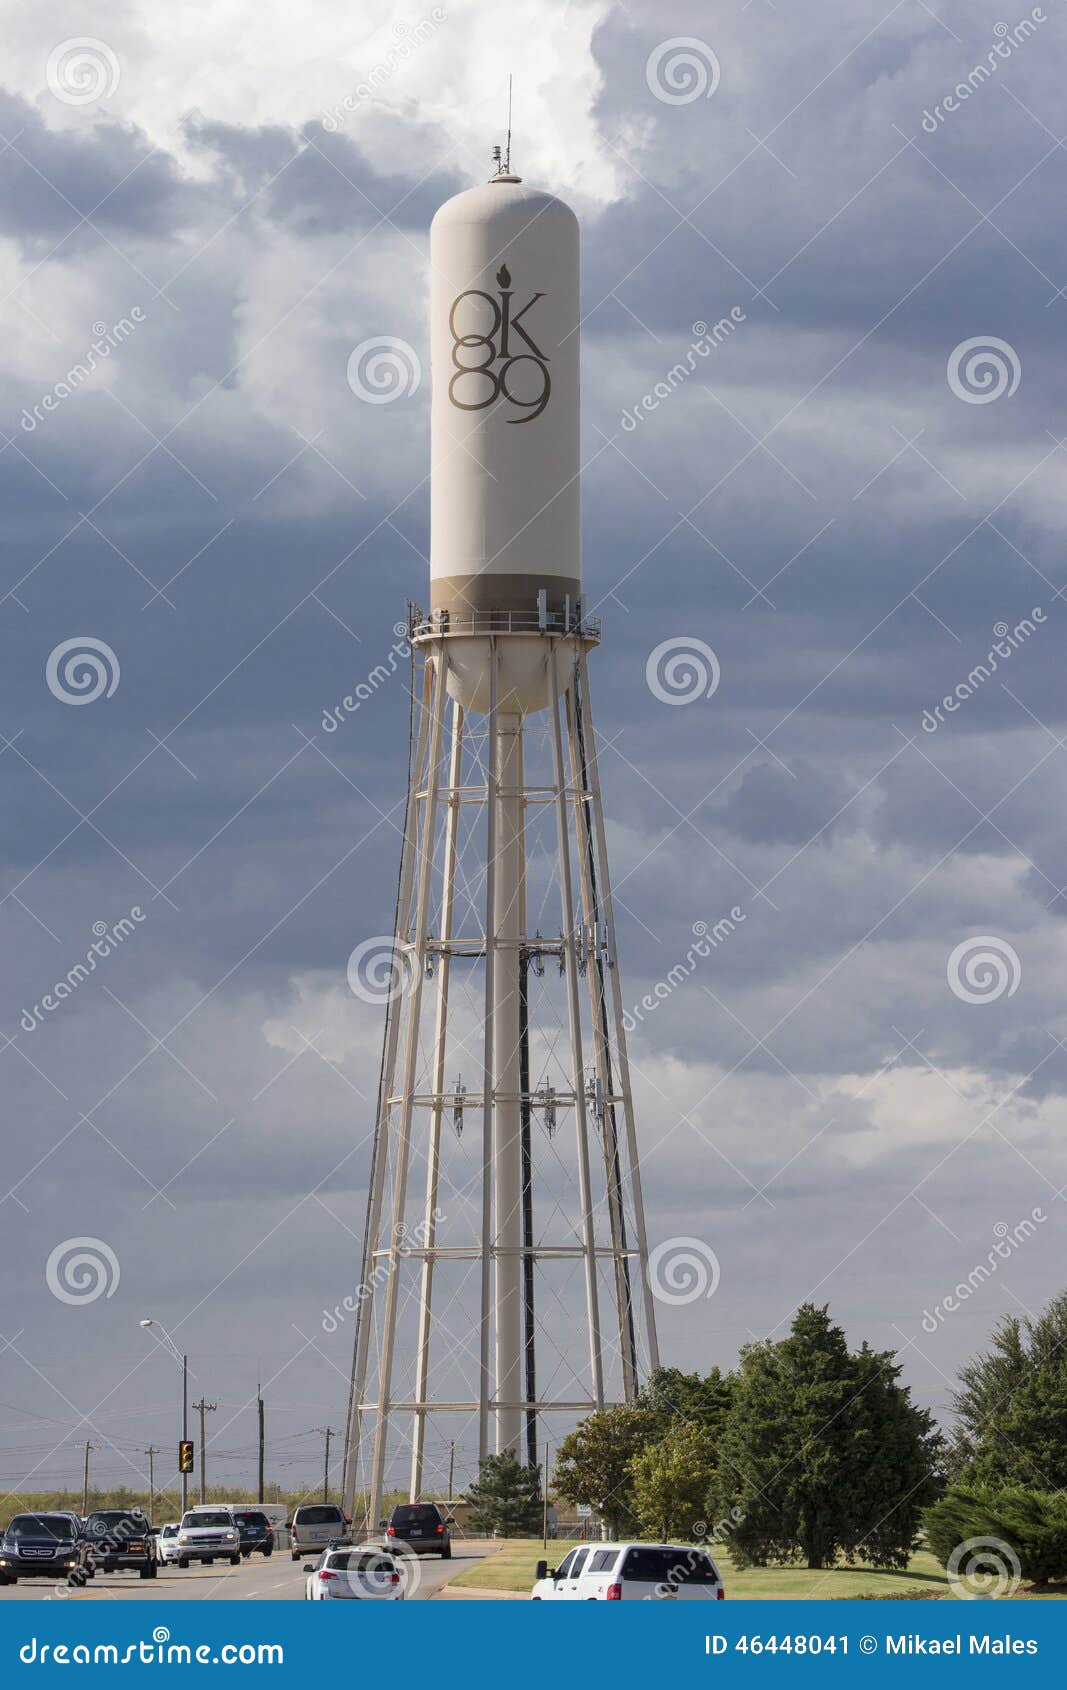 oklahoma city water tower by lake hefner